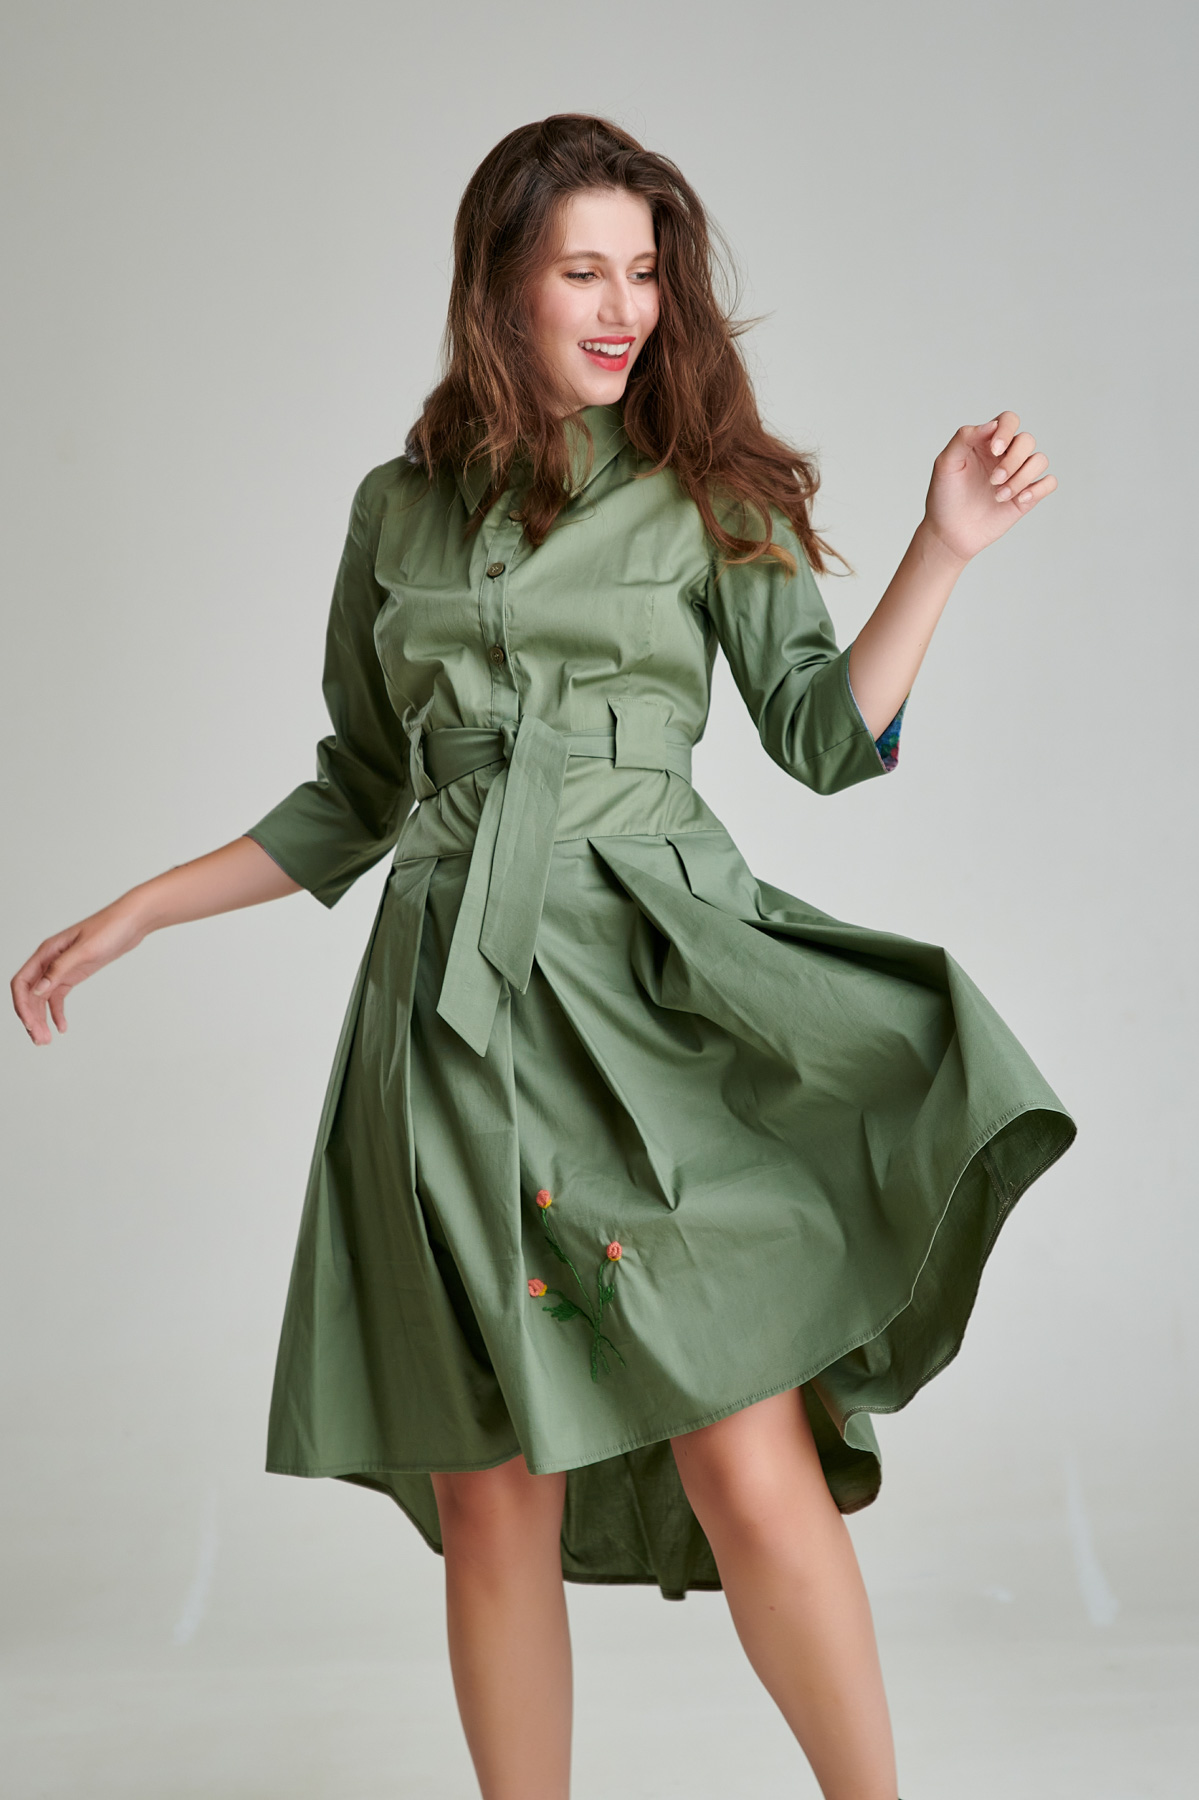 CORALIN casual mint green poplin dress. Natural fabrics, original design, handmade embroidery